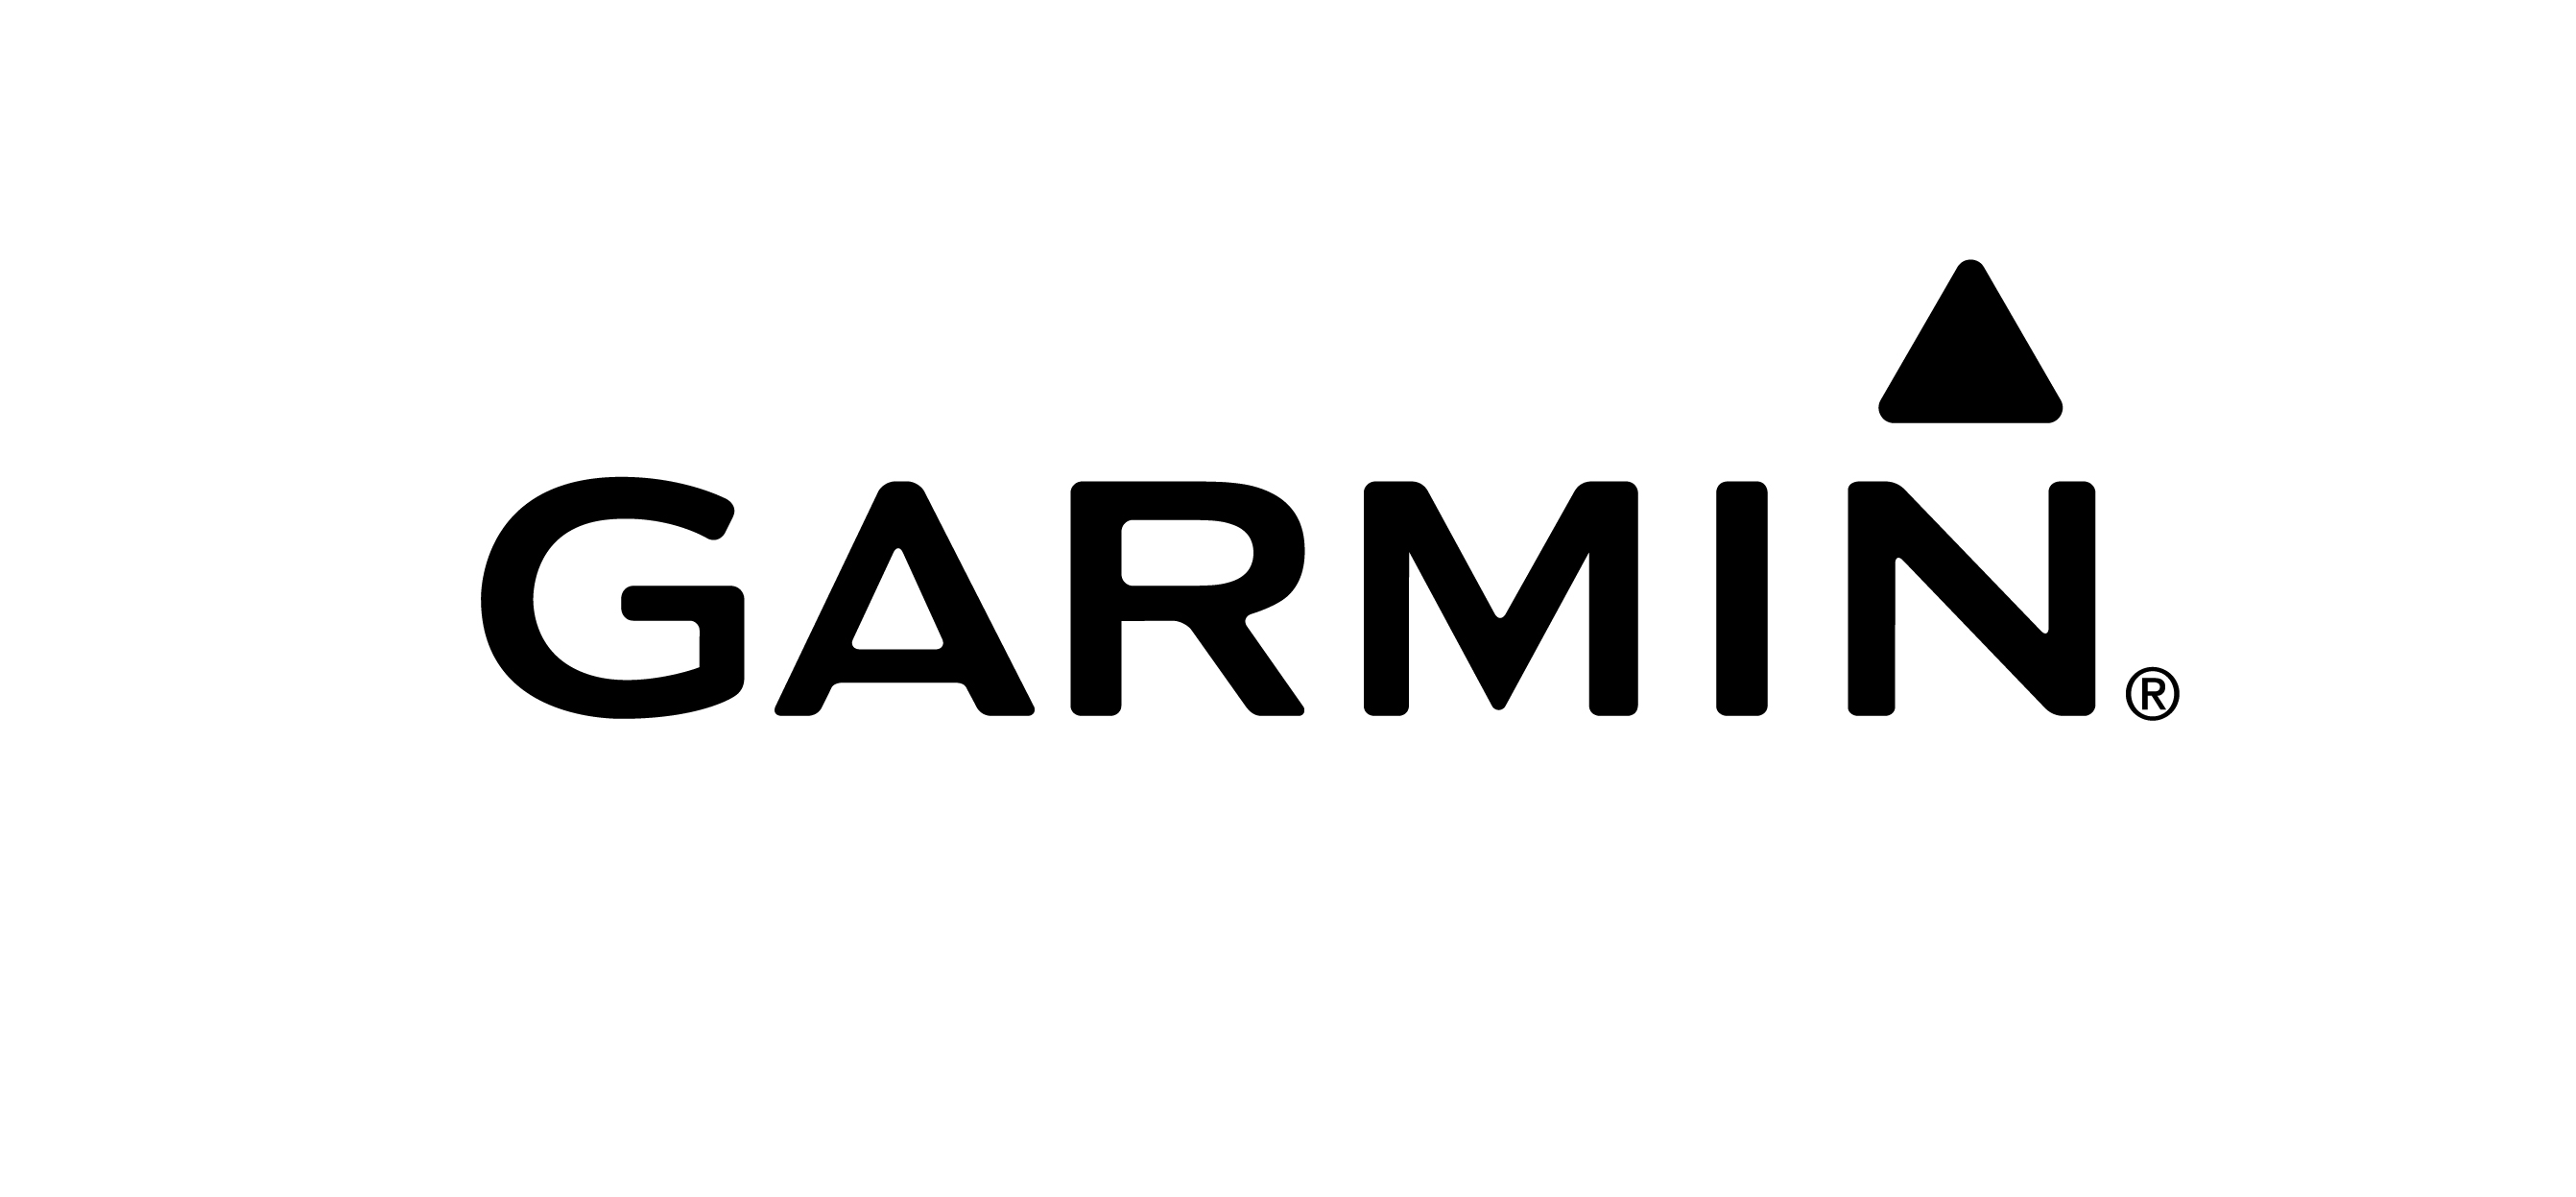 Garmin Europe Ltd.